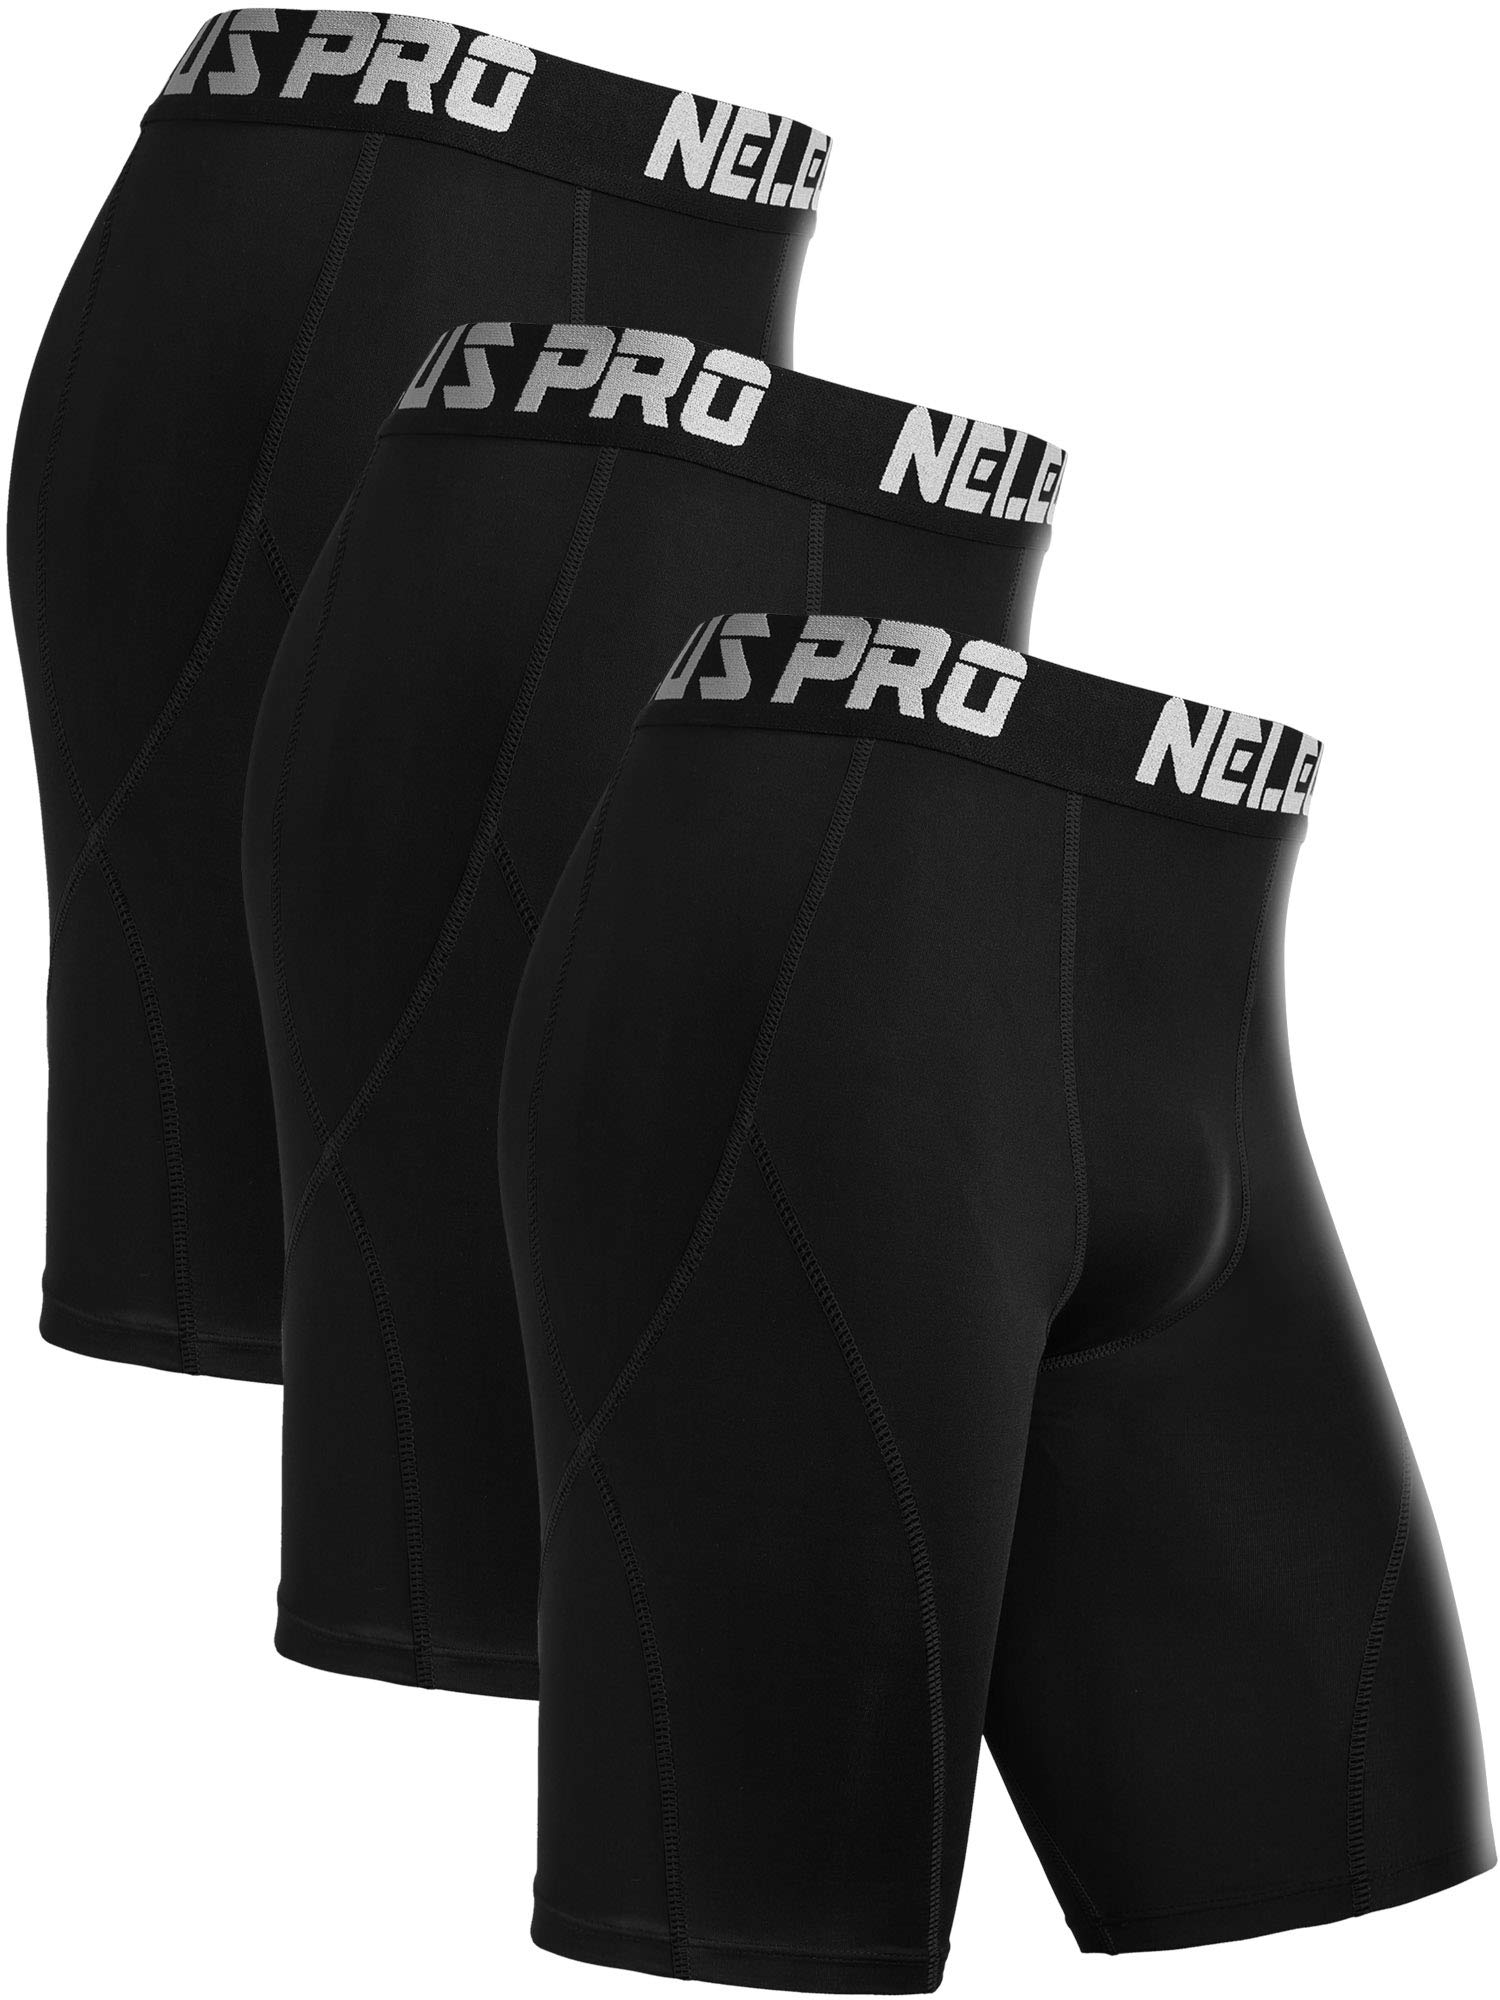 NELEUS Men's Compression Shorts Pack of 3 3X-Large 6012 Black/Black/Black 3  Pack